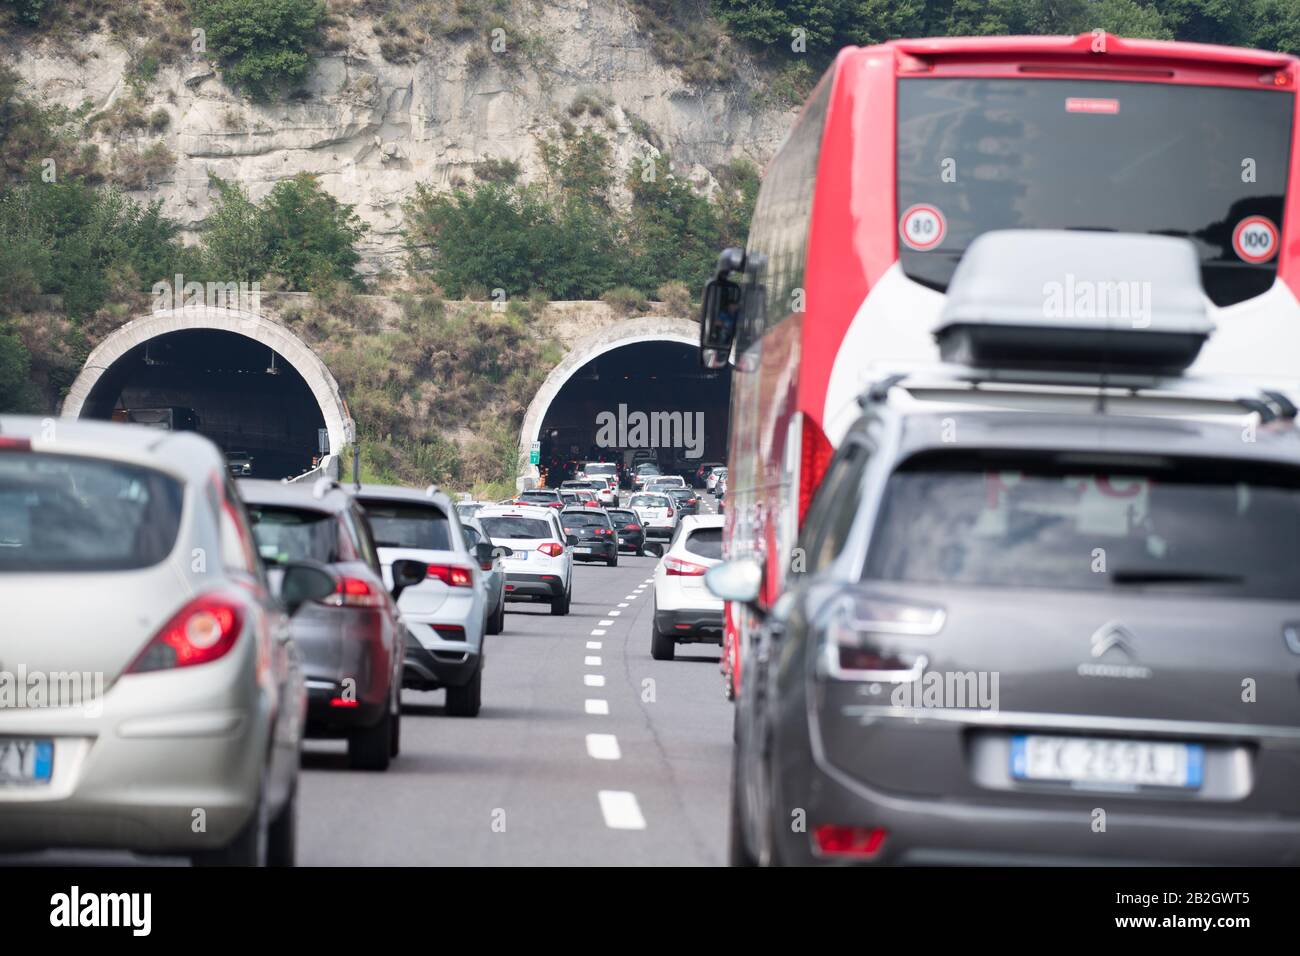 Autostrada A1 Milano Napoli Called Autostrada Del Sole In Tuscany Italy August 24th 2019